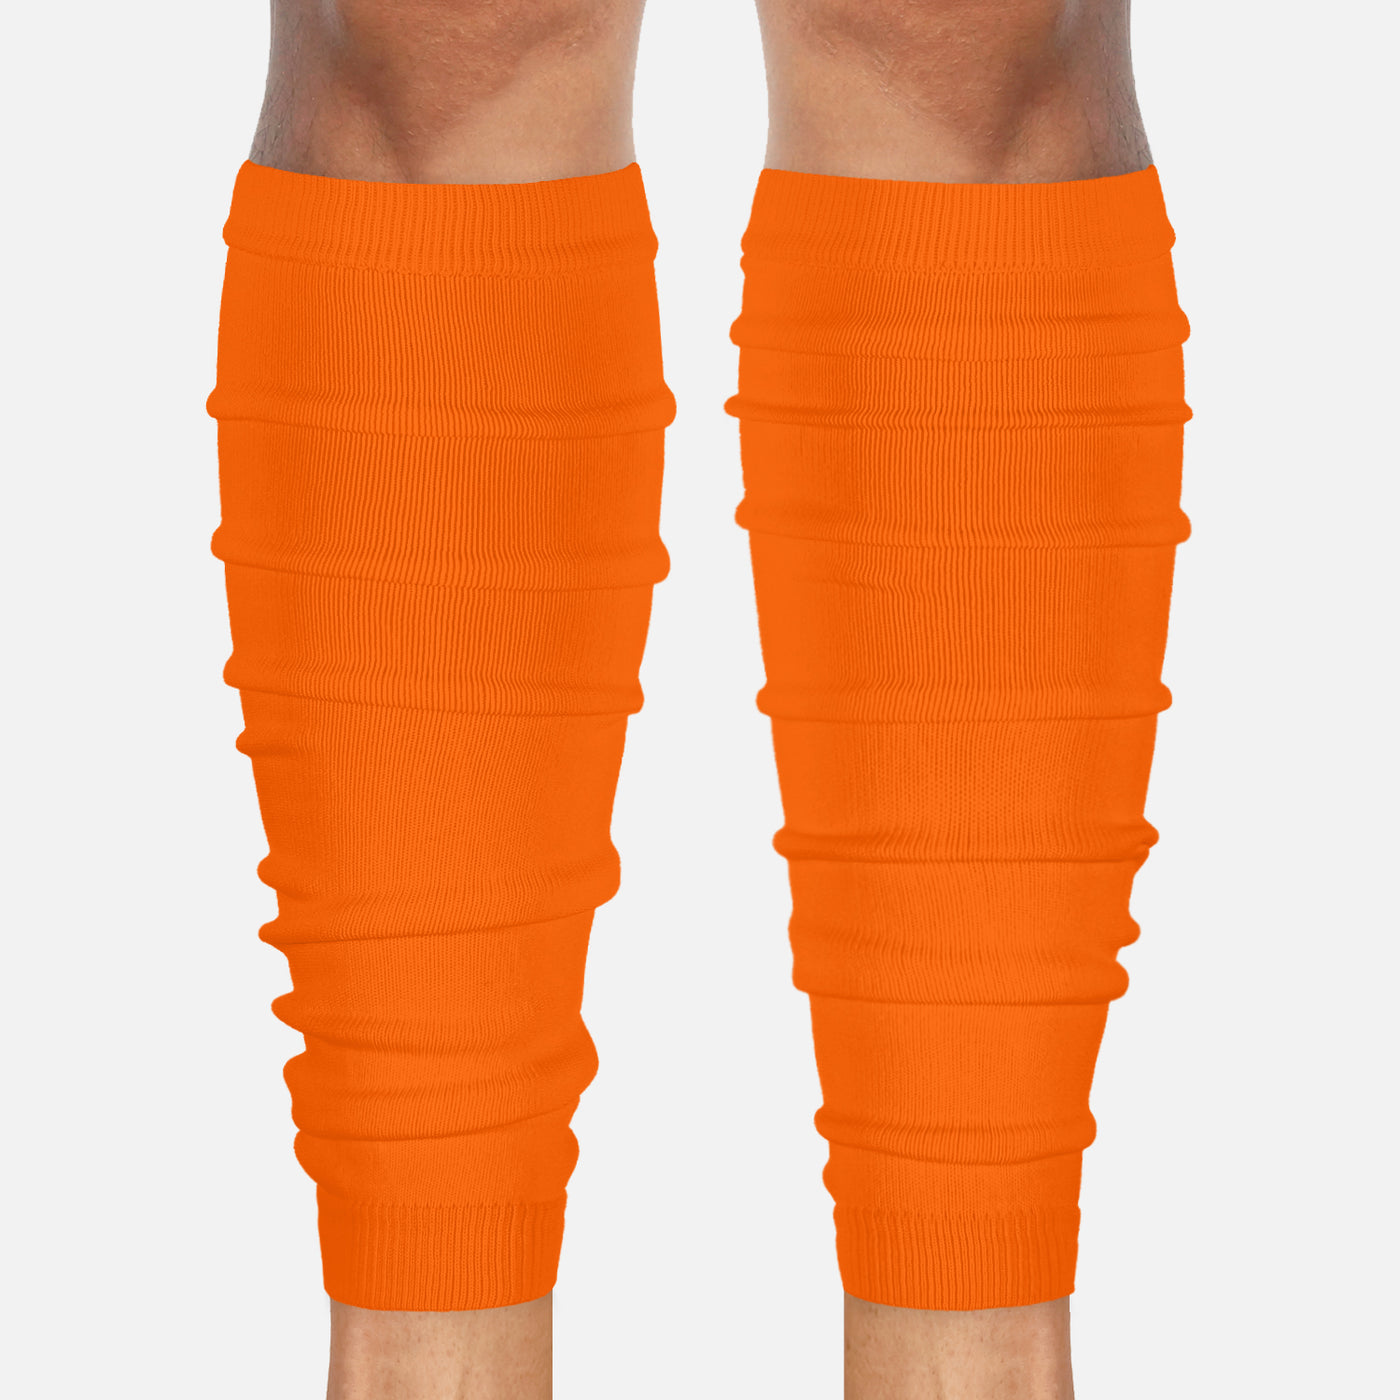 Hot Orange Scrunchie Leg Sleeves